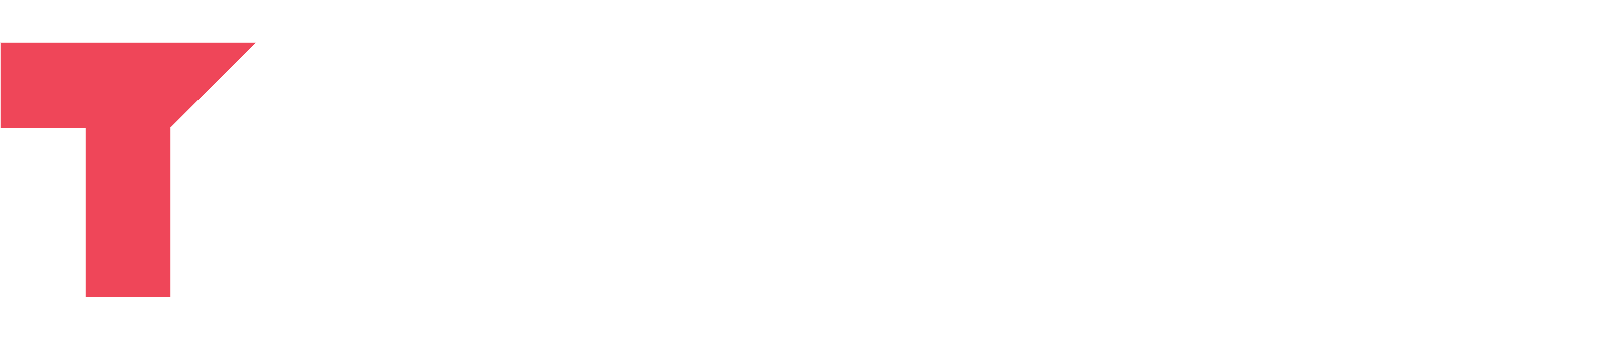 Reimbursement-Logo